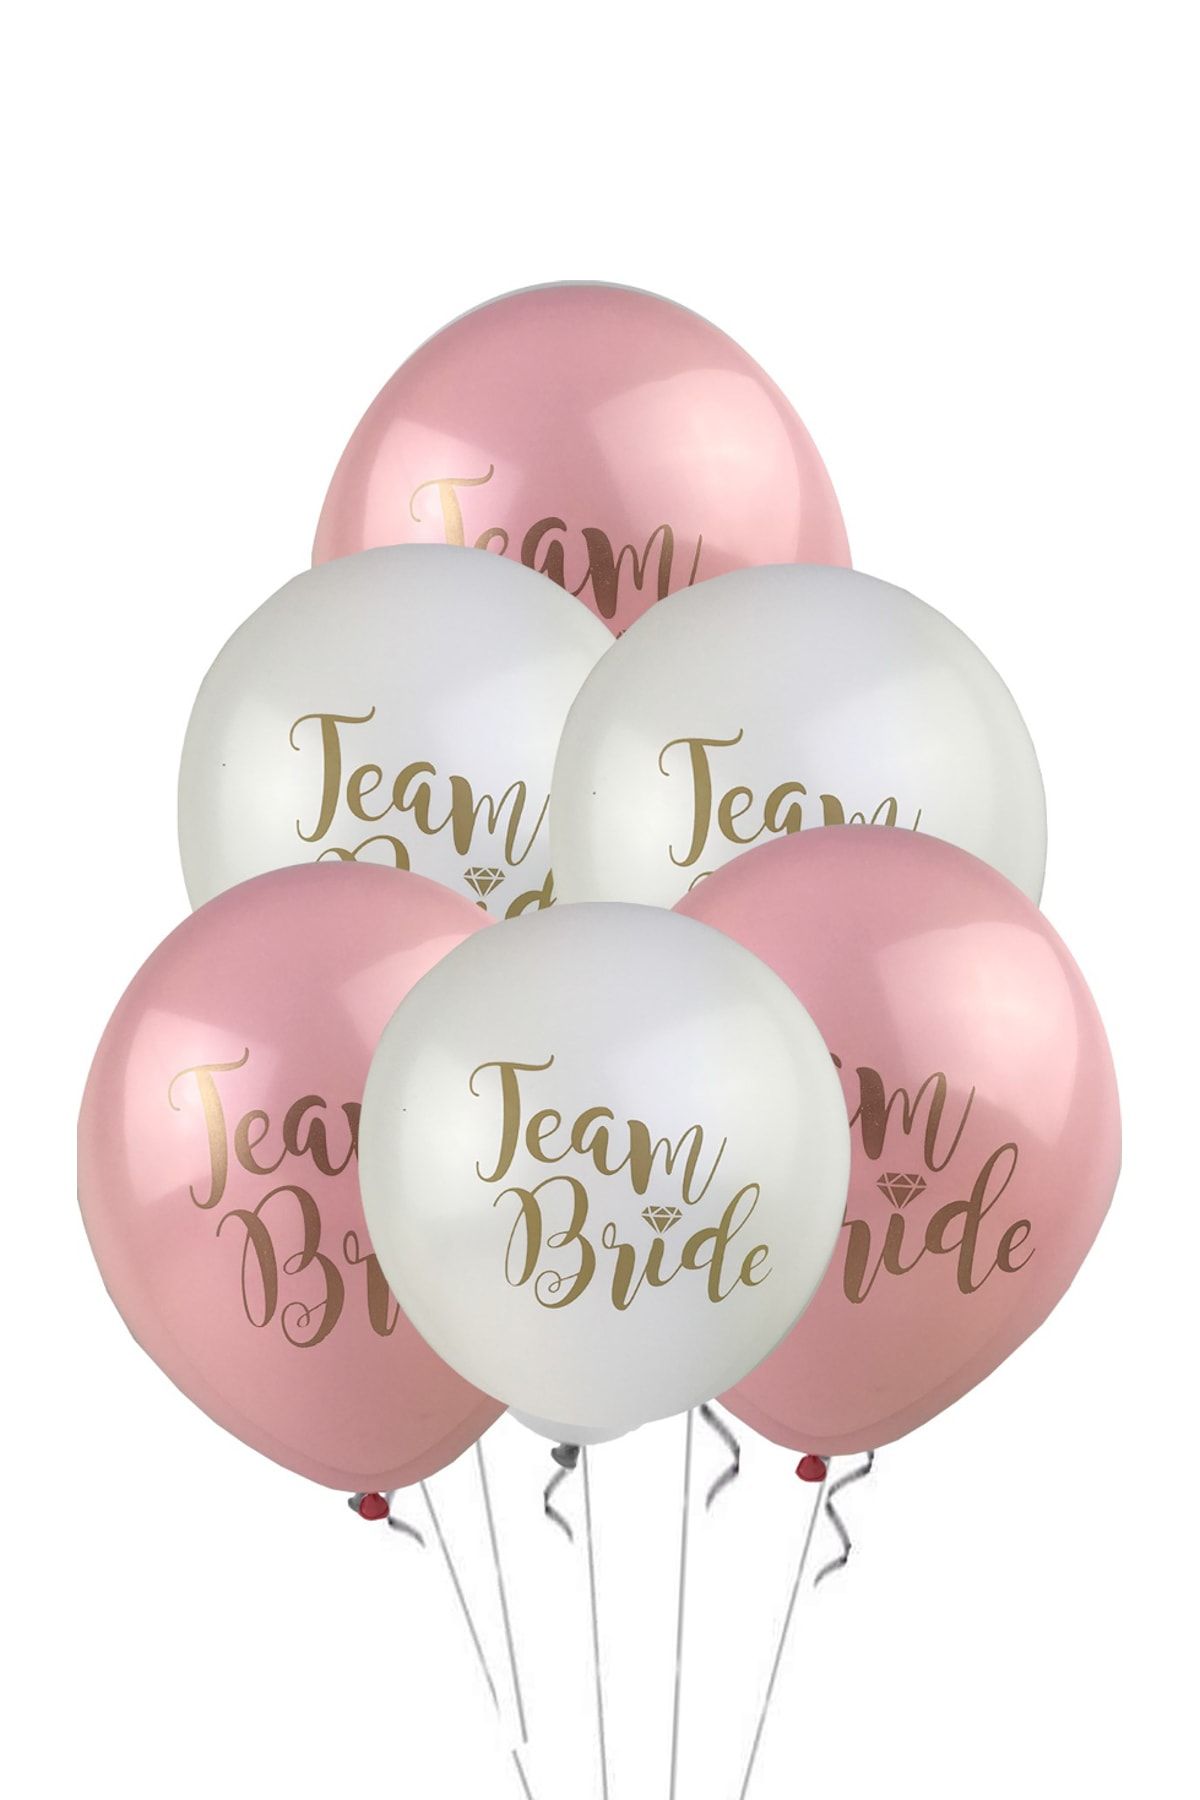 Magic Hobby 10 Adet Team Bride Gold Baskılı Beyaz - Pembe Balon Set - Nedime Balonu